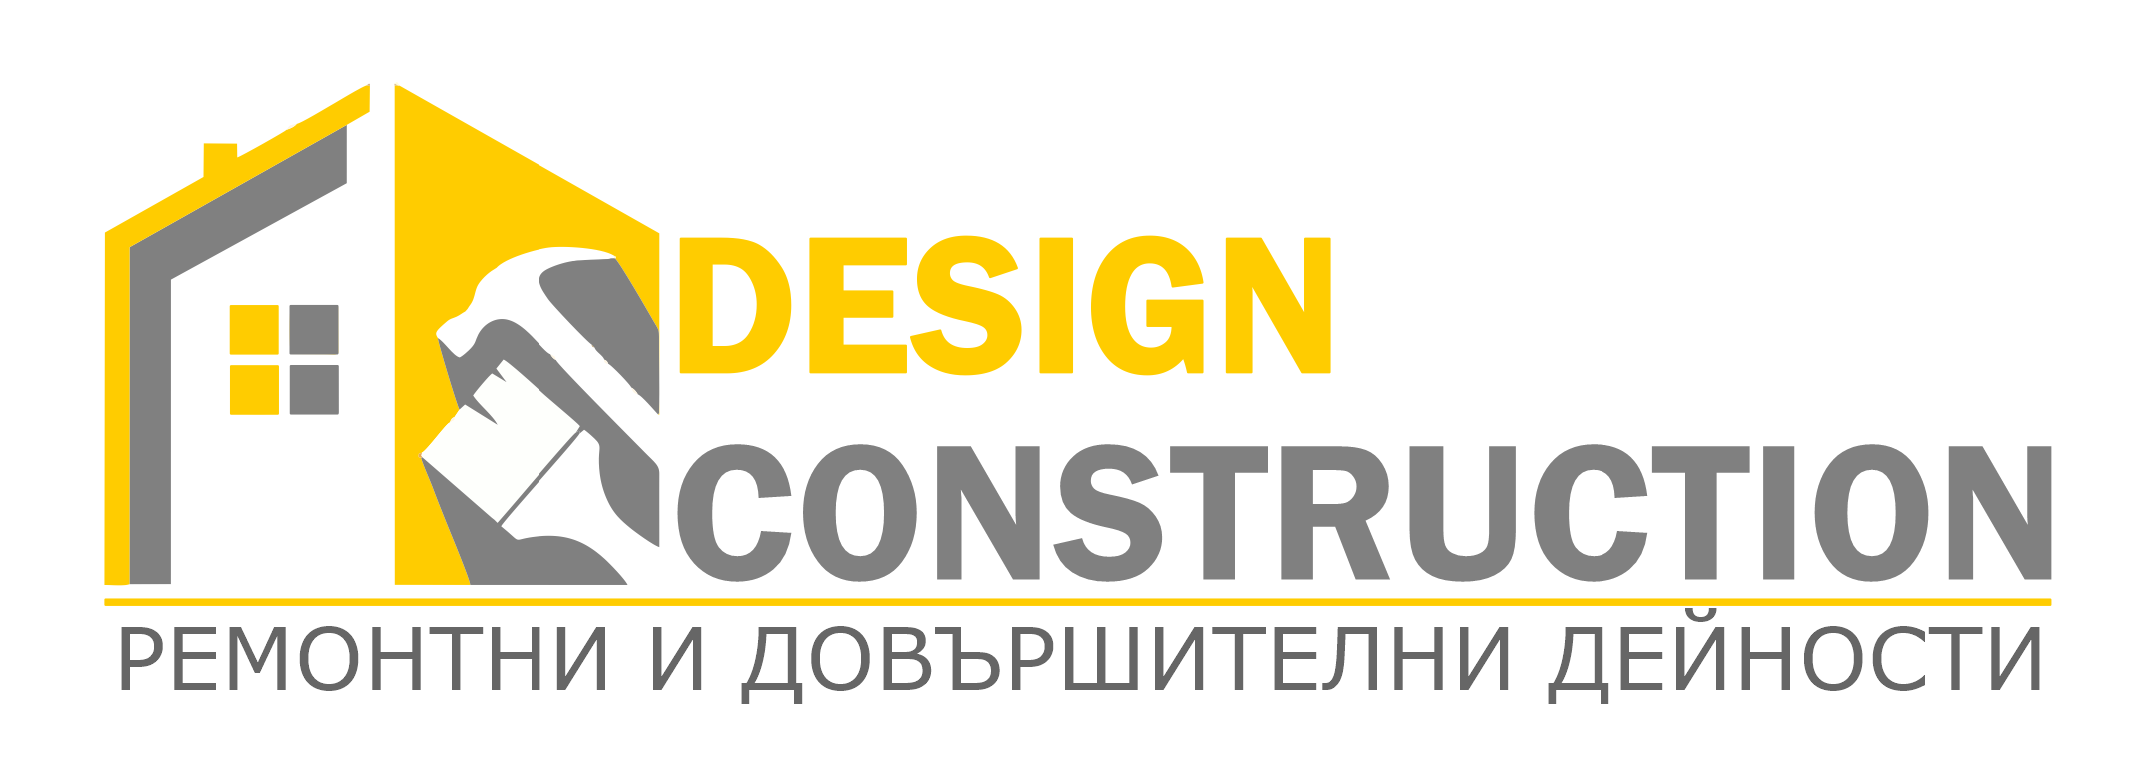 943-final-logo-design-constrhjhjhjhj-16463929119559.png